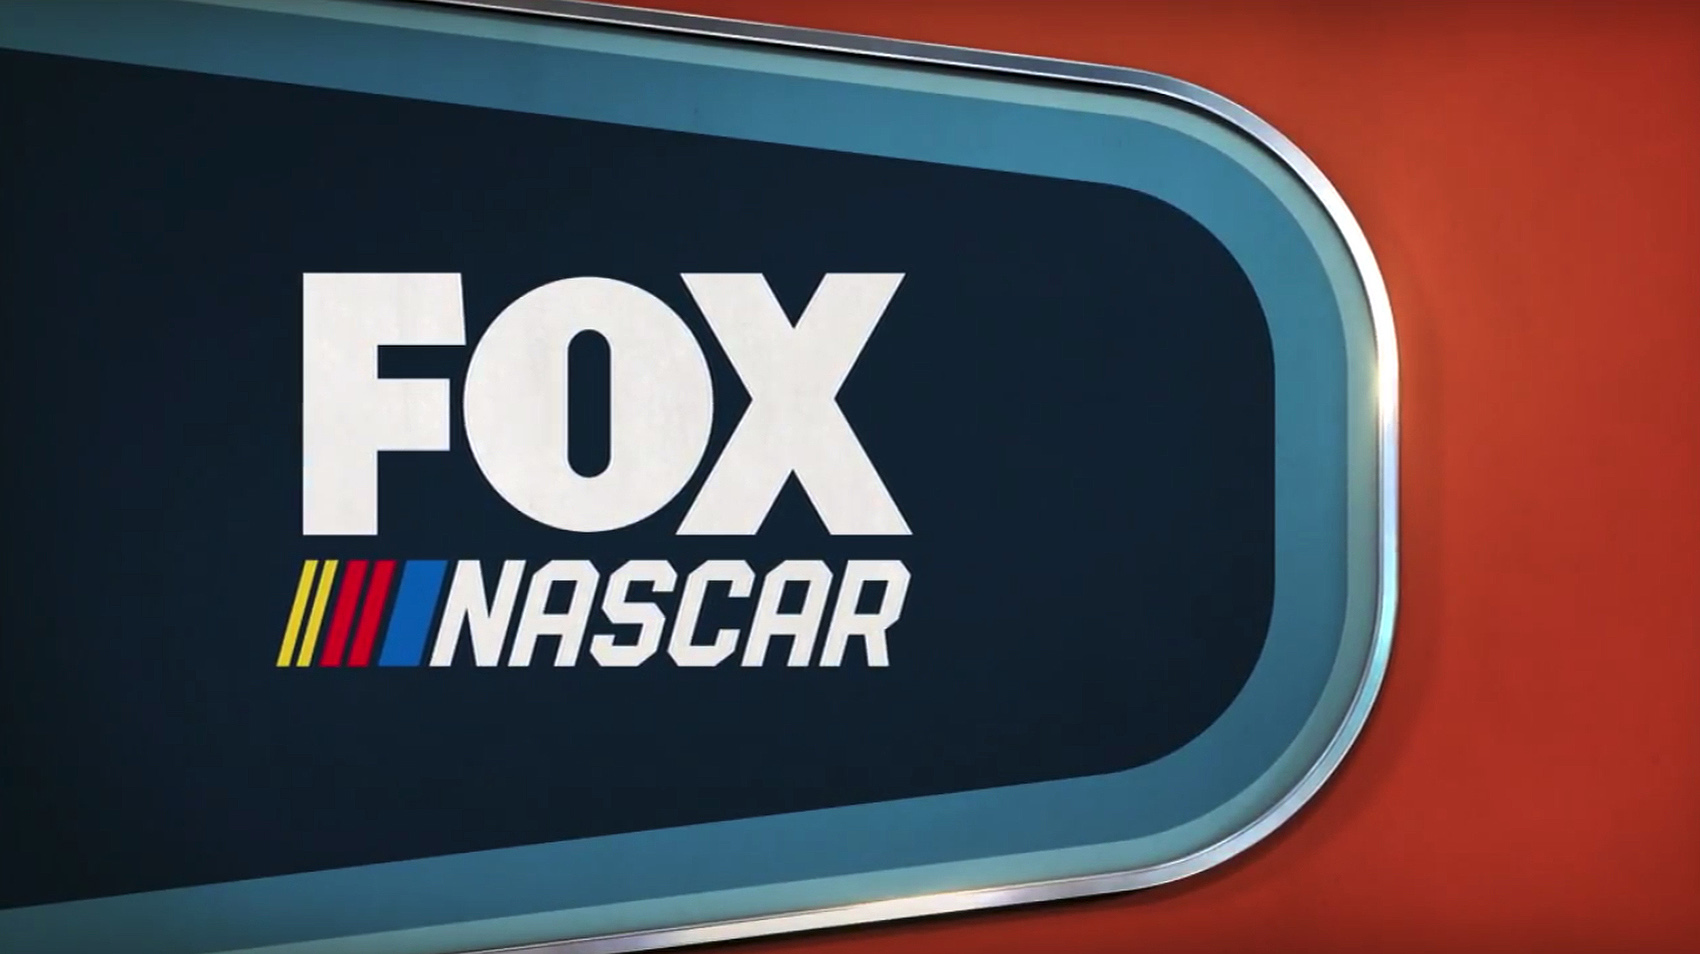 NCS_NASCAR-FOX-2019-BROADCAST-DESIGN_001